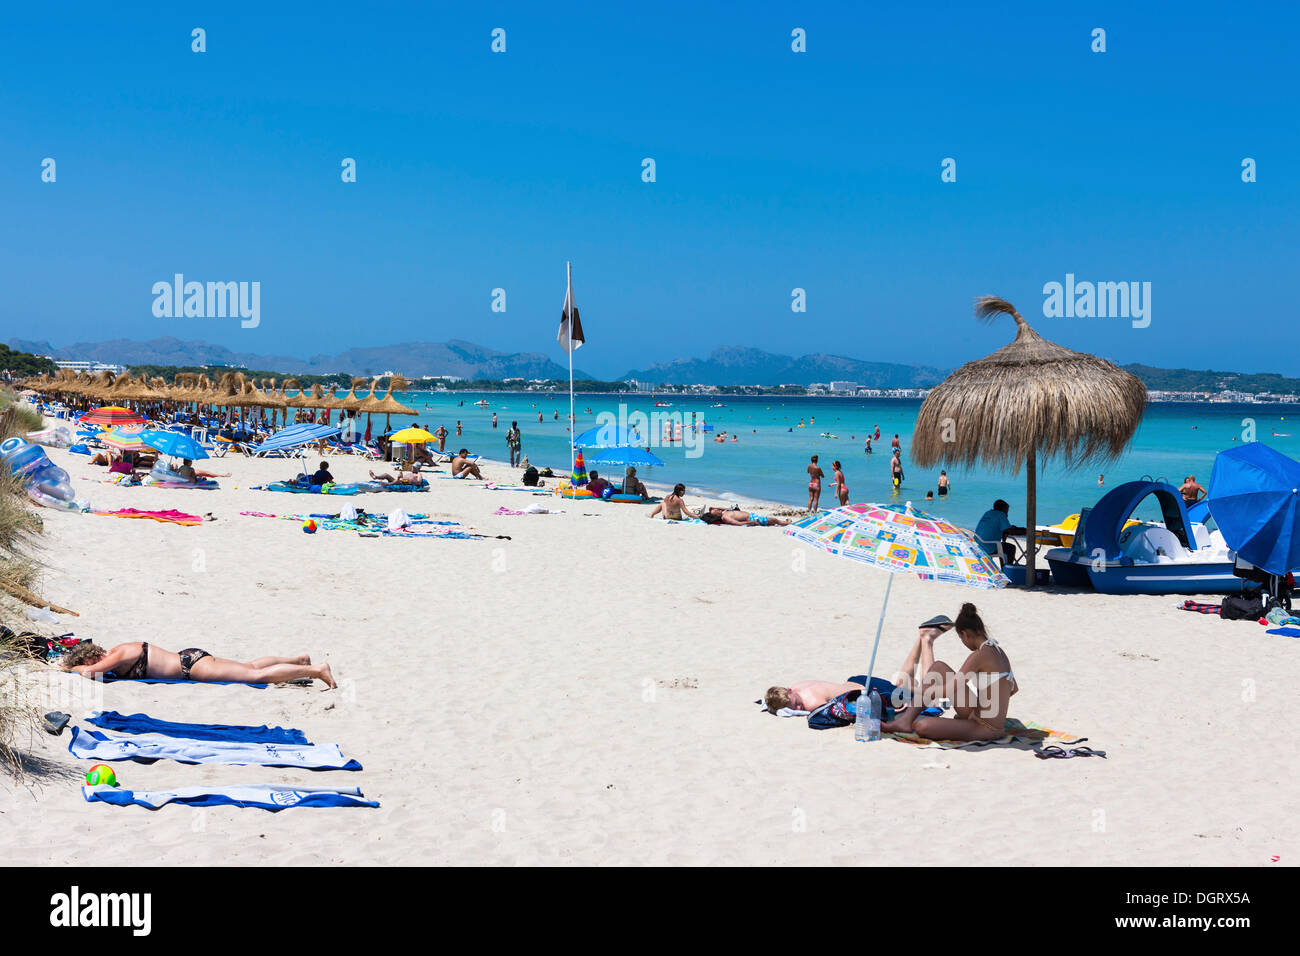 Sandy beach with tourists, Playa de Muro, Bon Aire Ses Fotges, Majorca, Balearic Islands, Spain Stock Photo